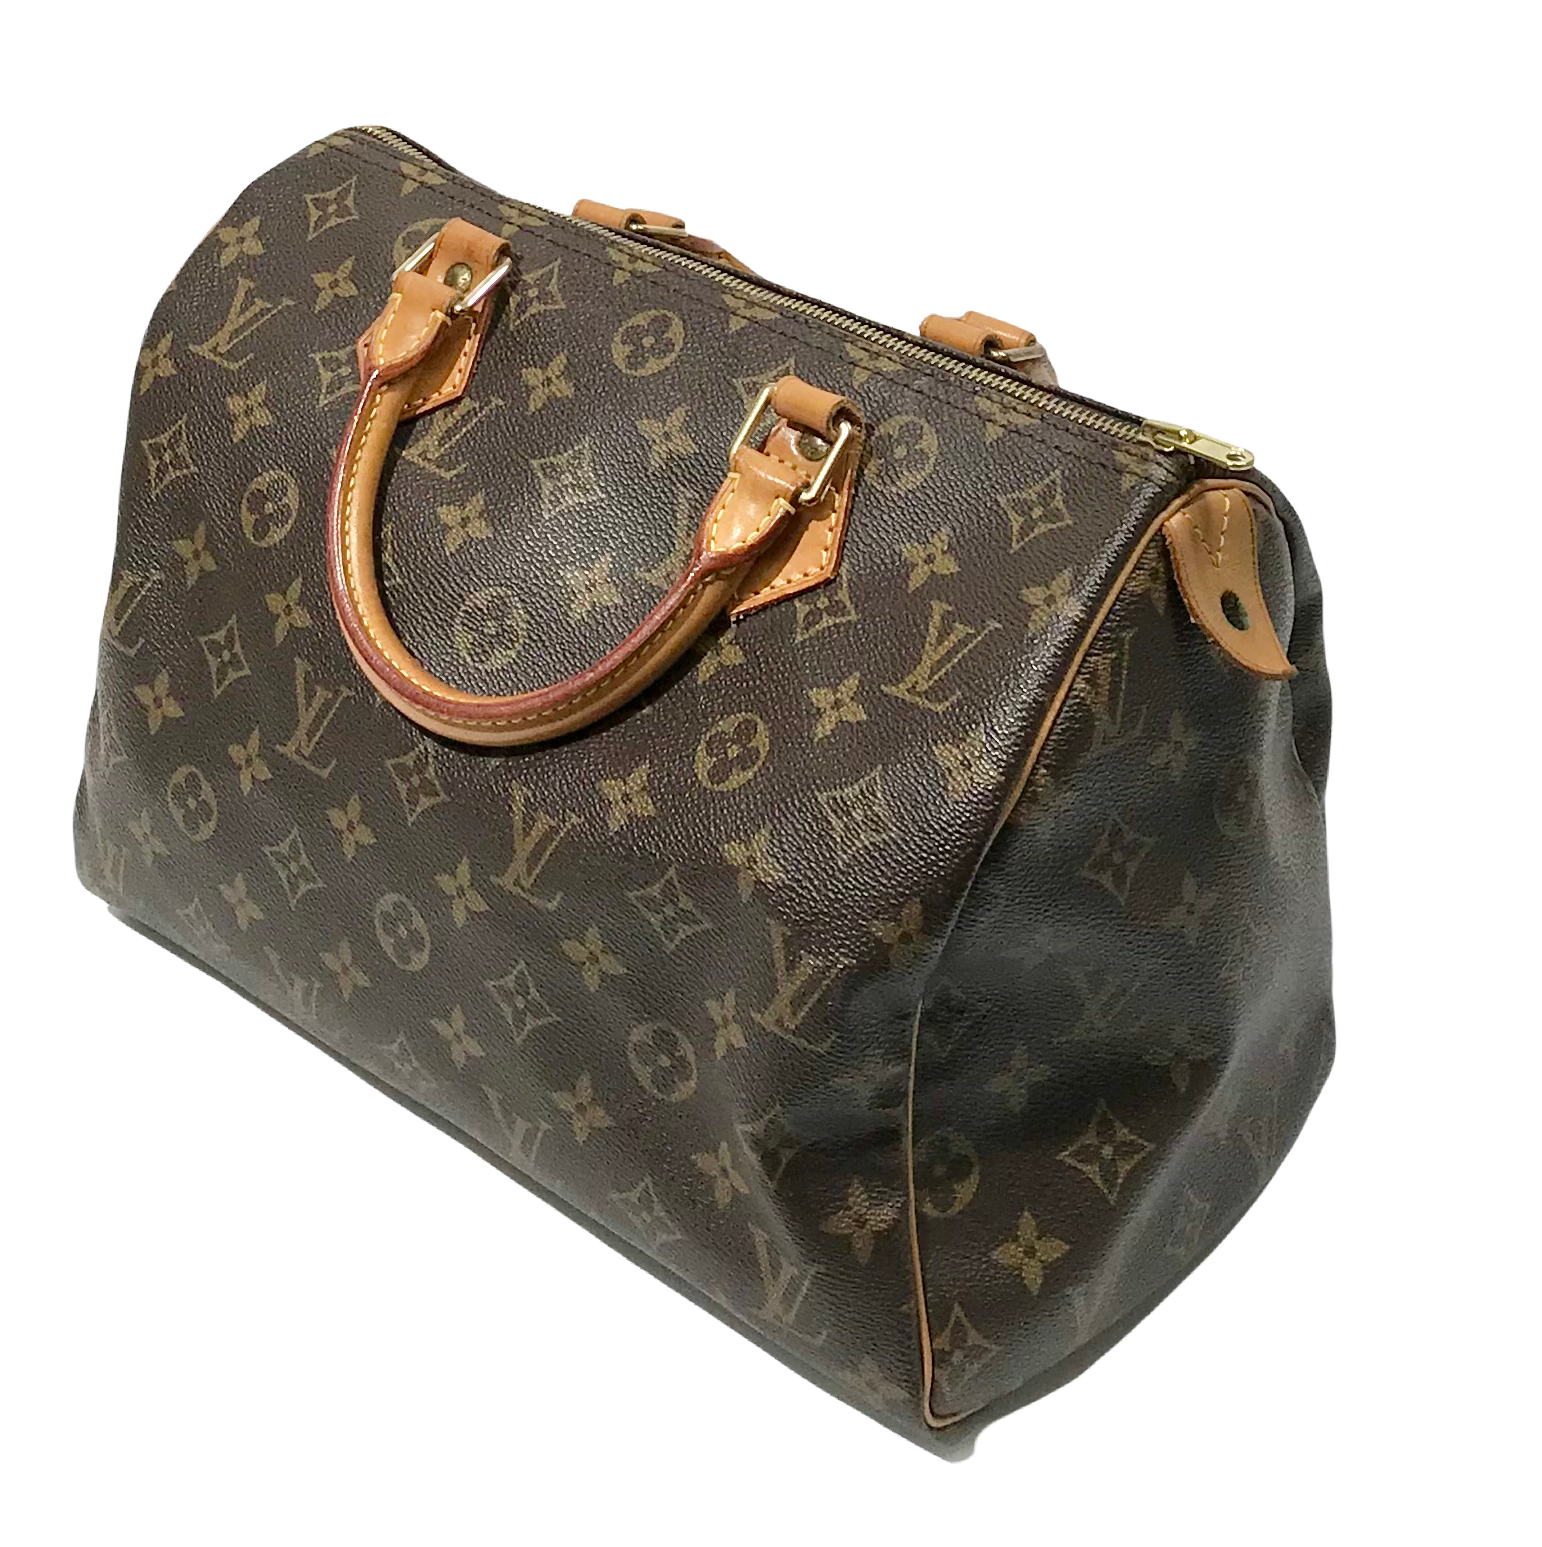 Louis Vuitton Monogram Vintage Speedy Bag 30 Brown